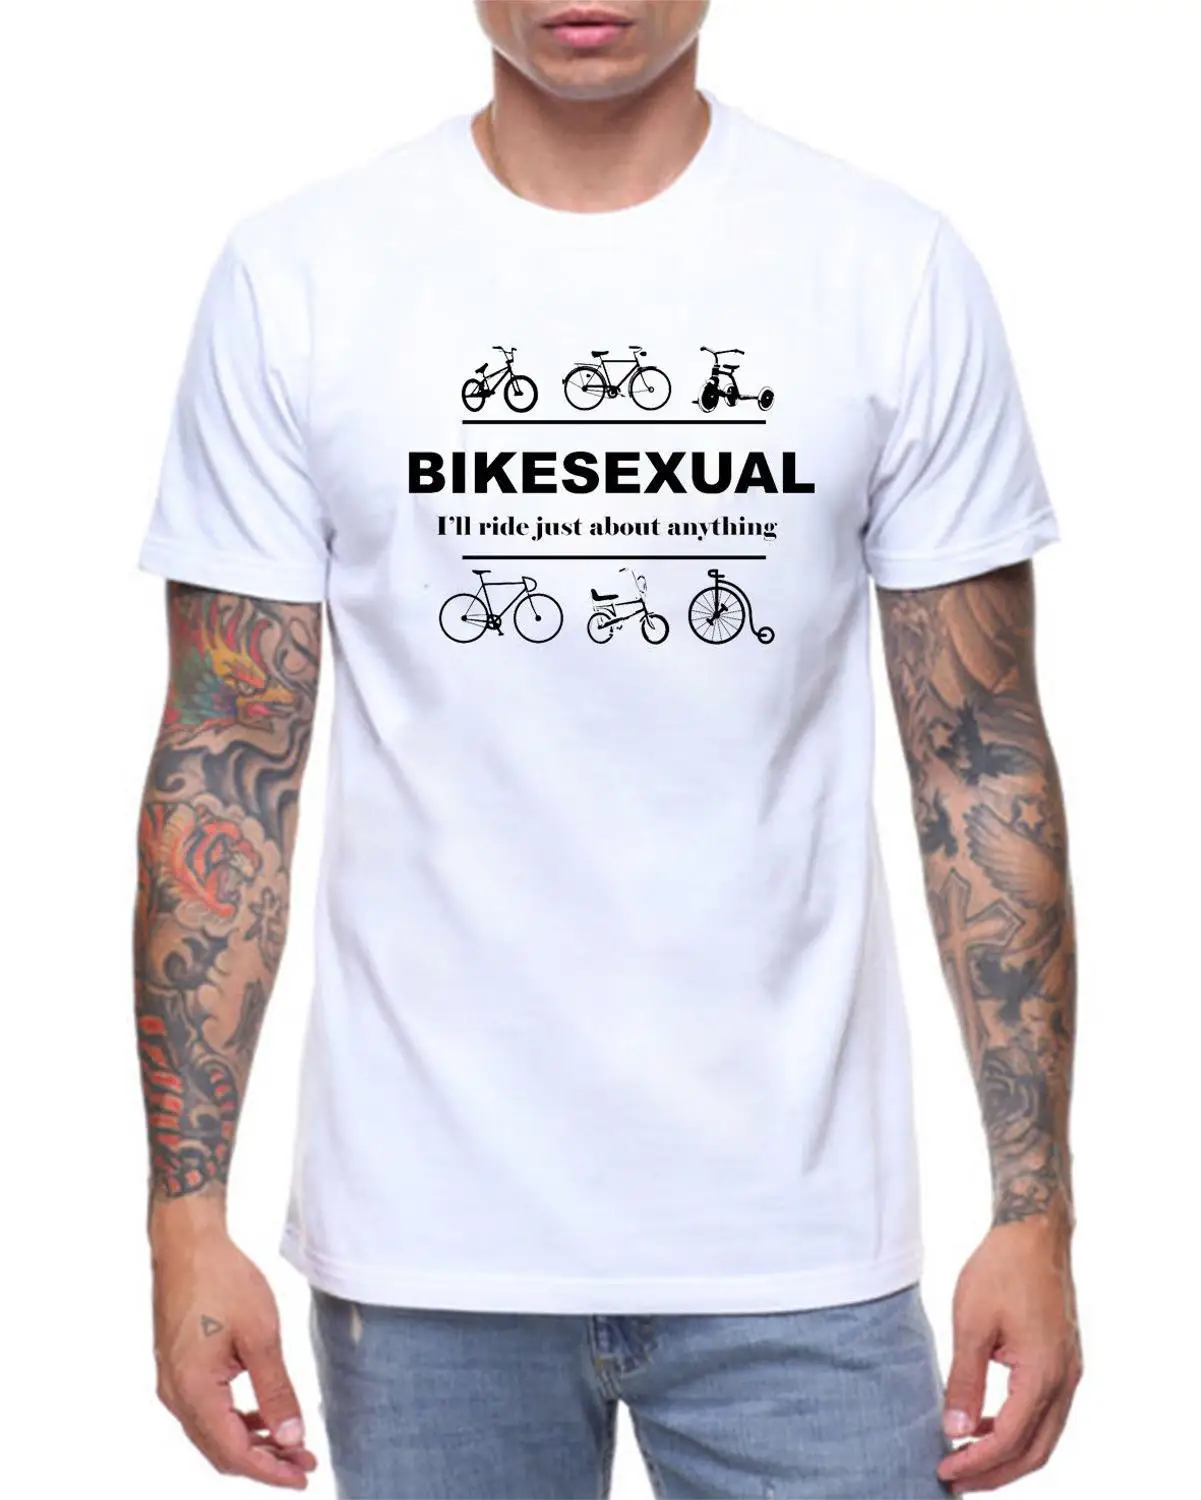 

Hot Sale 100% Cotton T SHIRT FUNNY PUN SLOGAN GAY PRIDE LESBIAN LGBT BIKER BIKES CYCLIST Tee Shirt